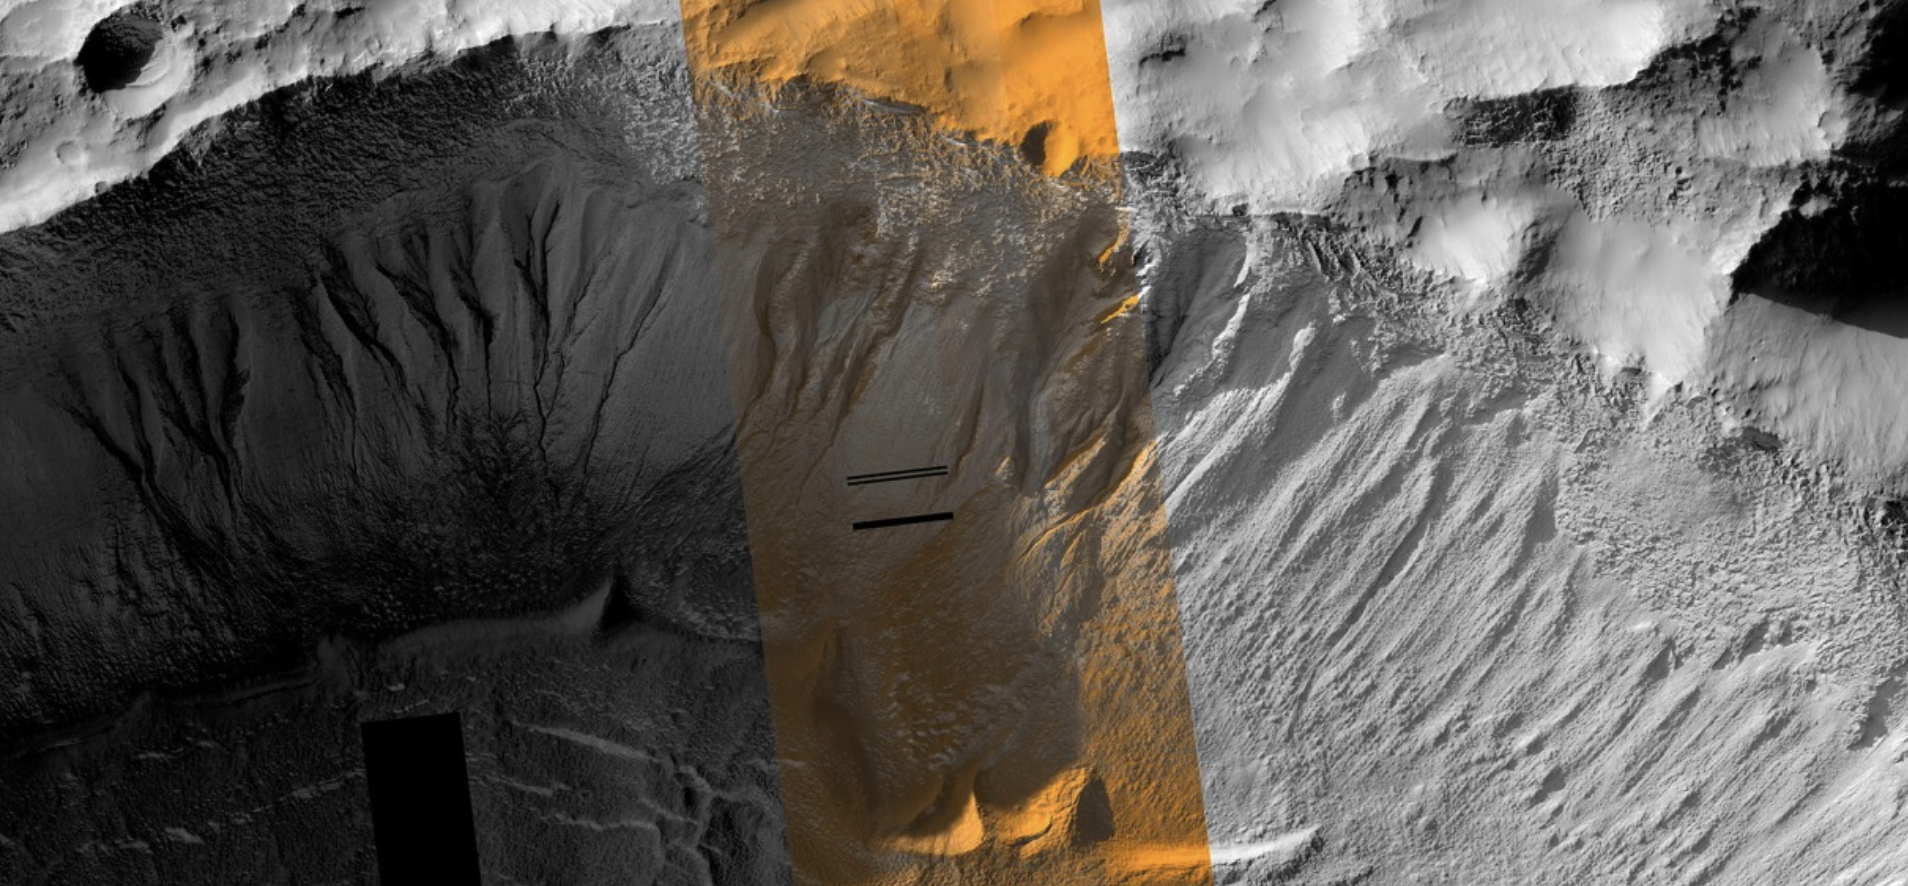 A view of Gullies on Mars. Image Credit: NASA/JPL/Univ. of Arizona.